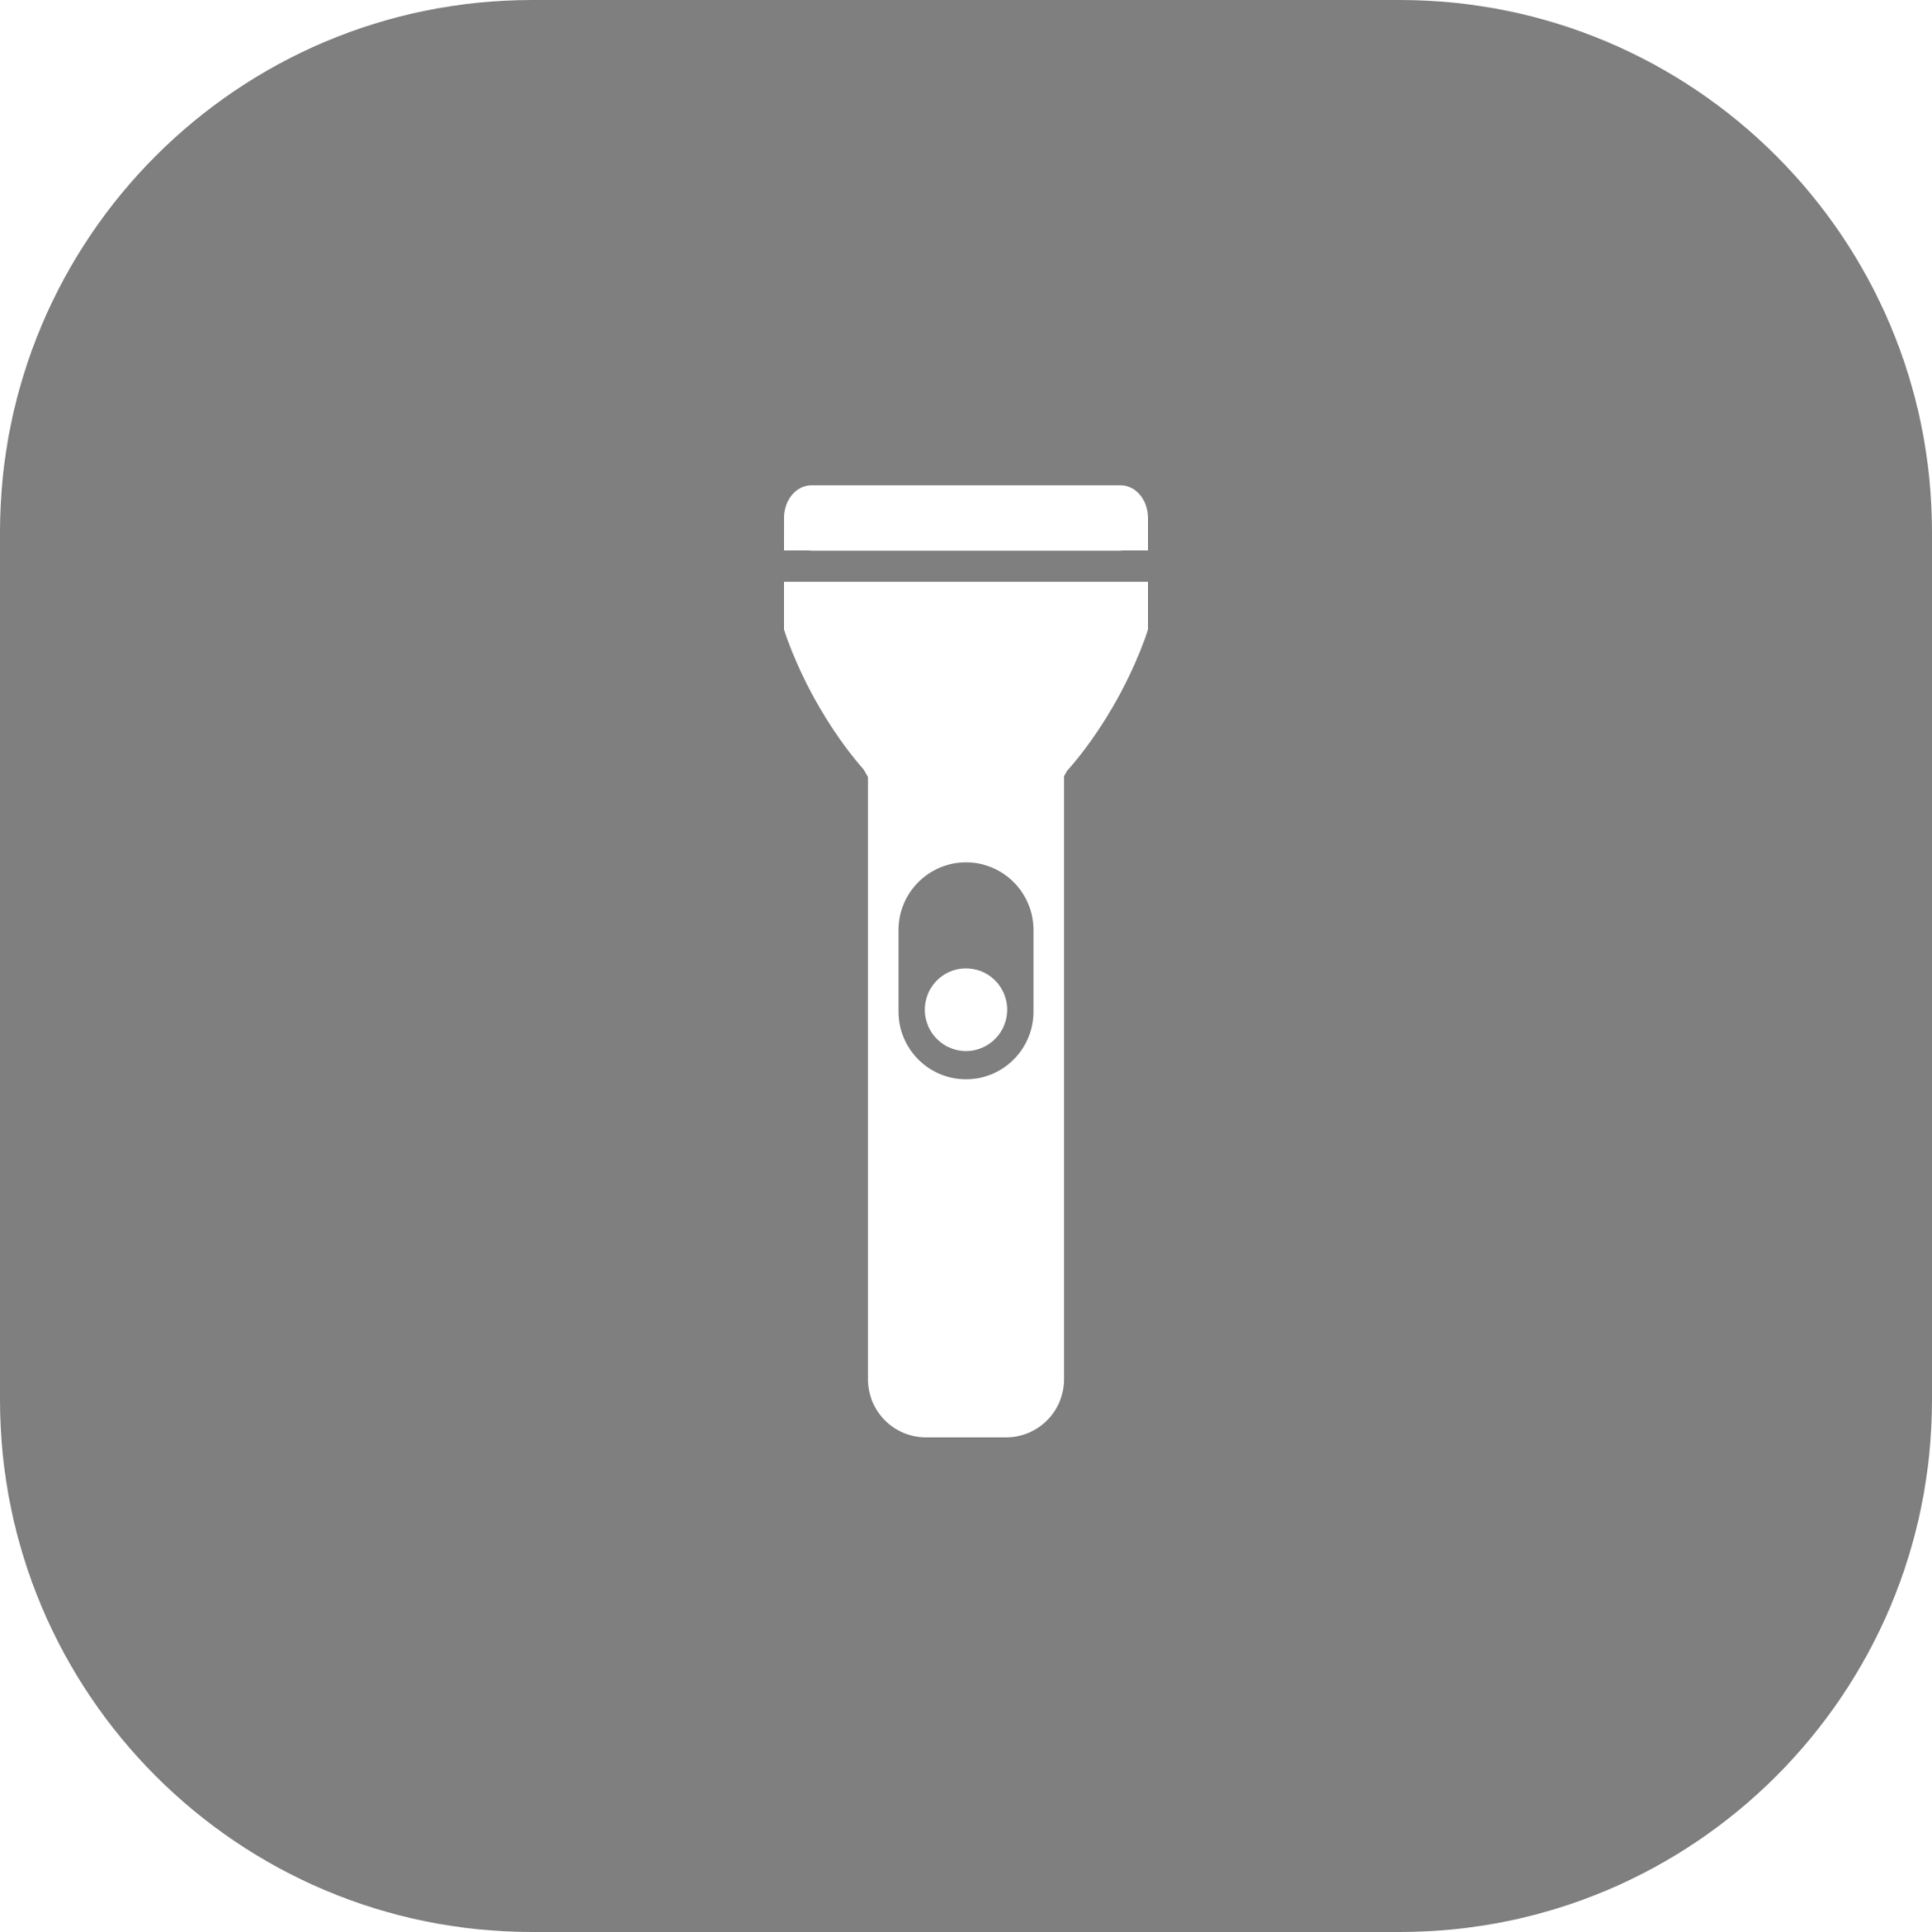 simple flashlight icon